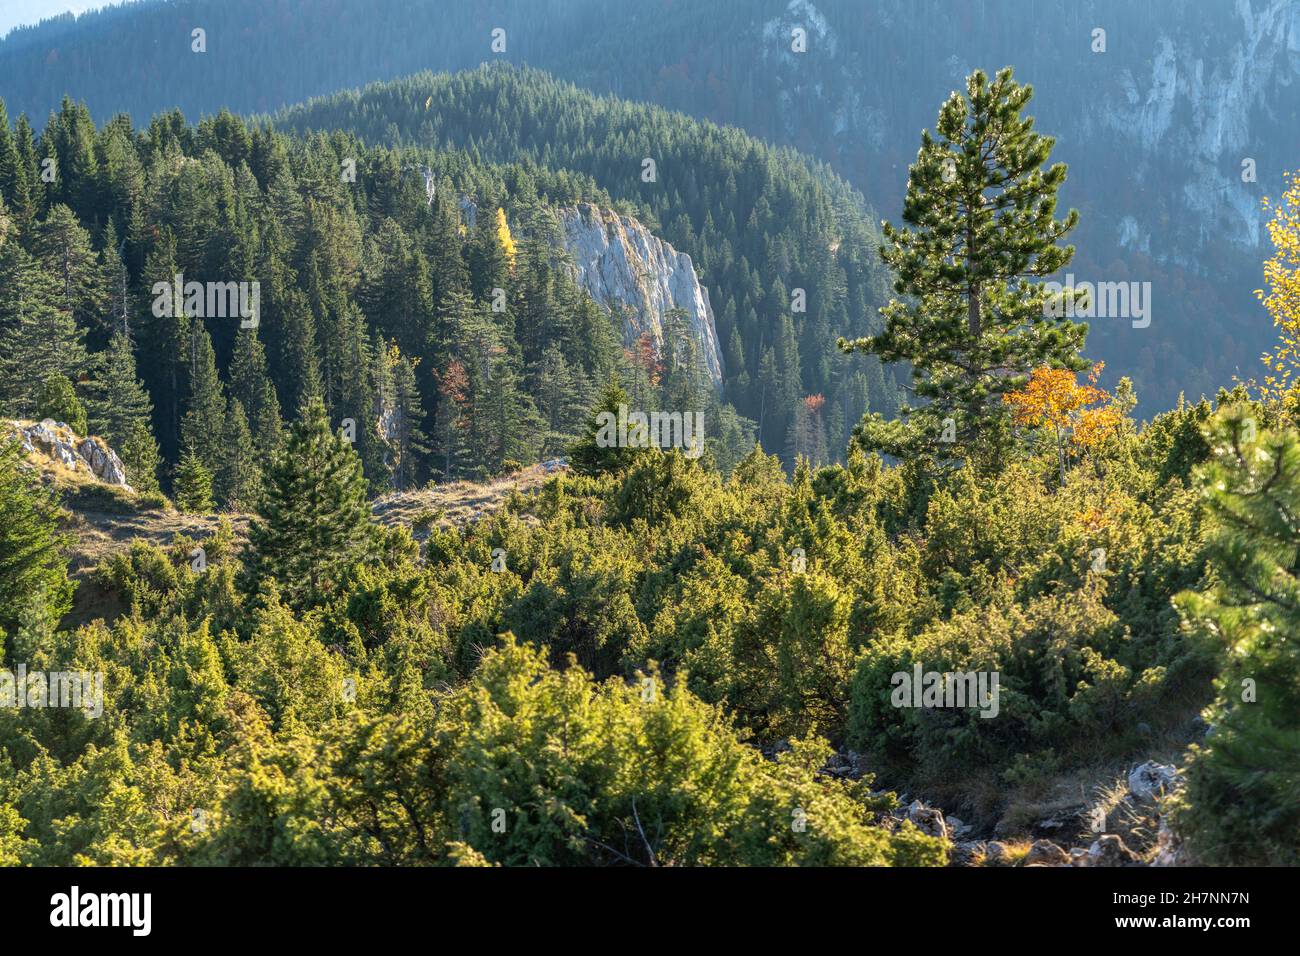 Wald im Durmitor Nationalpark, abljak, Montenegro, Europa  |    Forest of the Durmitor National Park, abljak, Montenegro, Europe Stock Photo